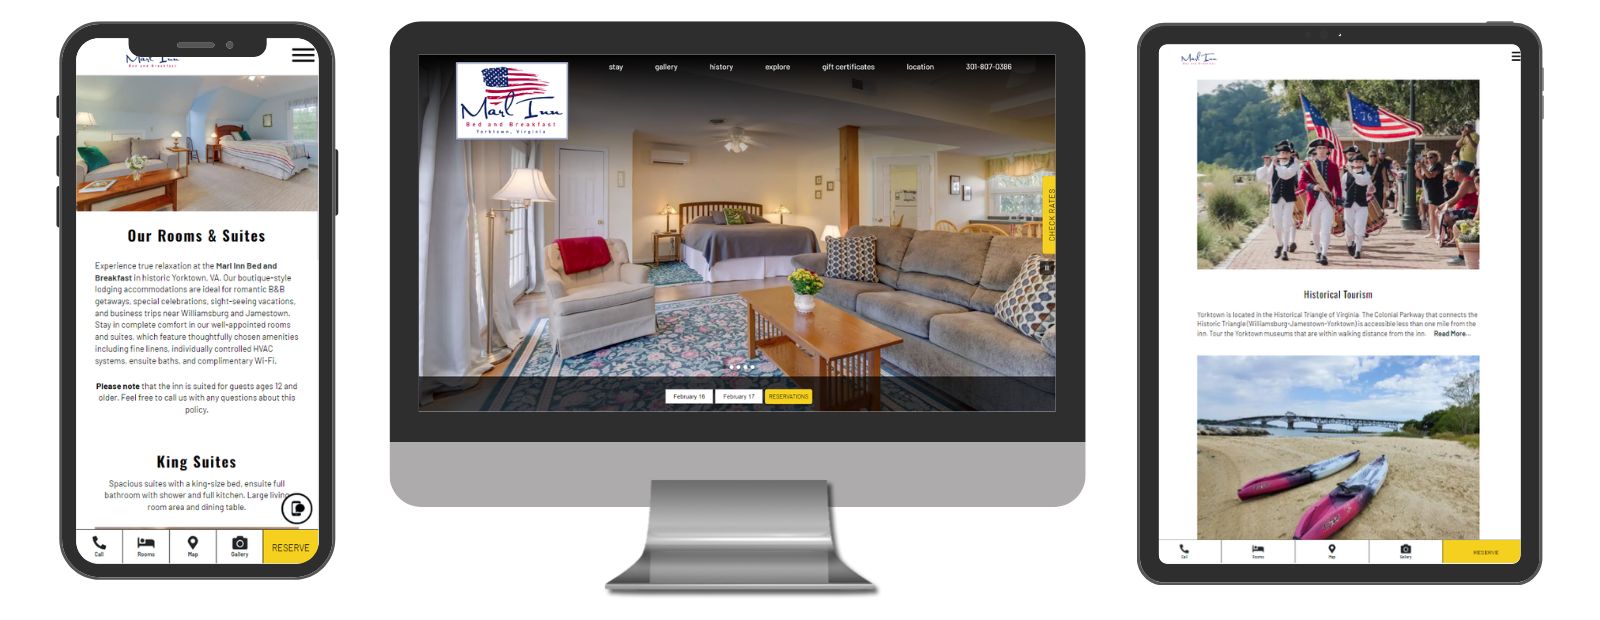 Marl Inn Bed & Breakfast - website displayed in 3 sizes - mobile, template and desktop